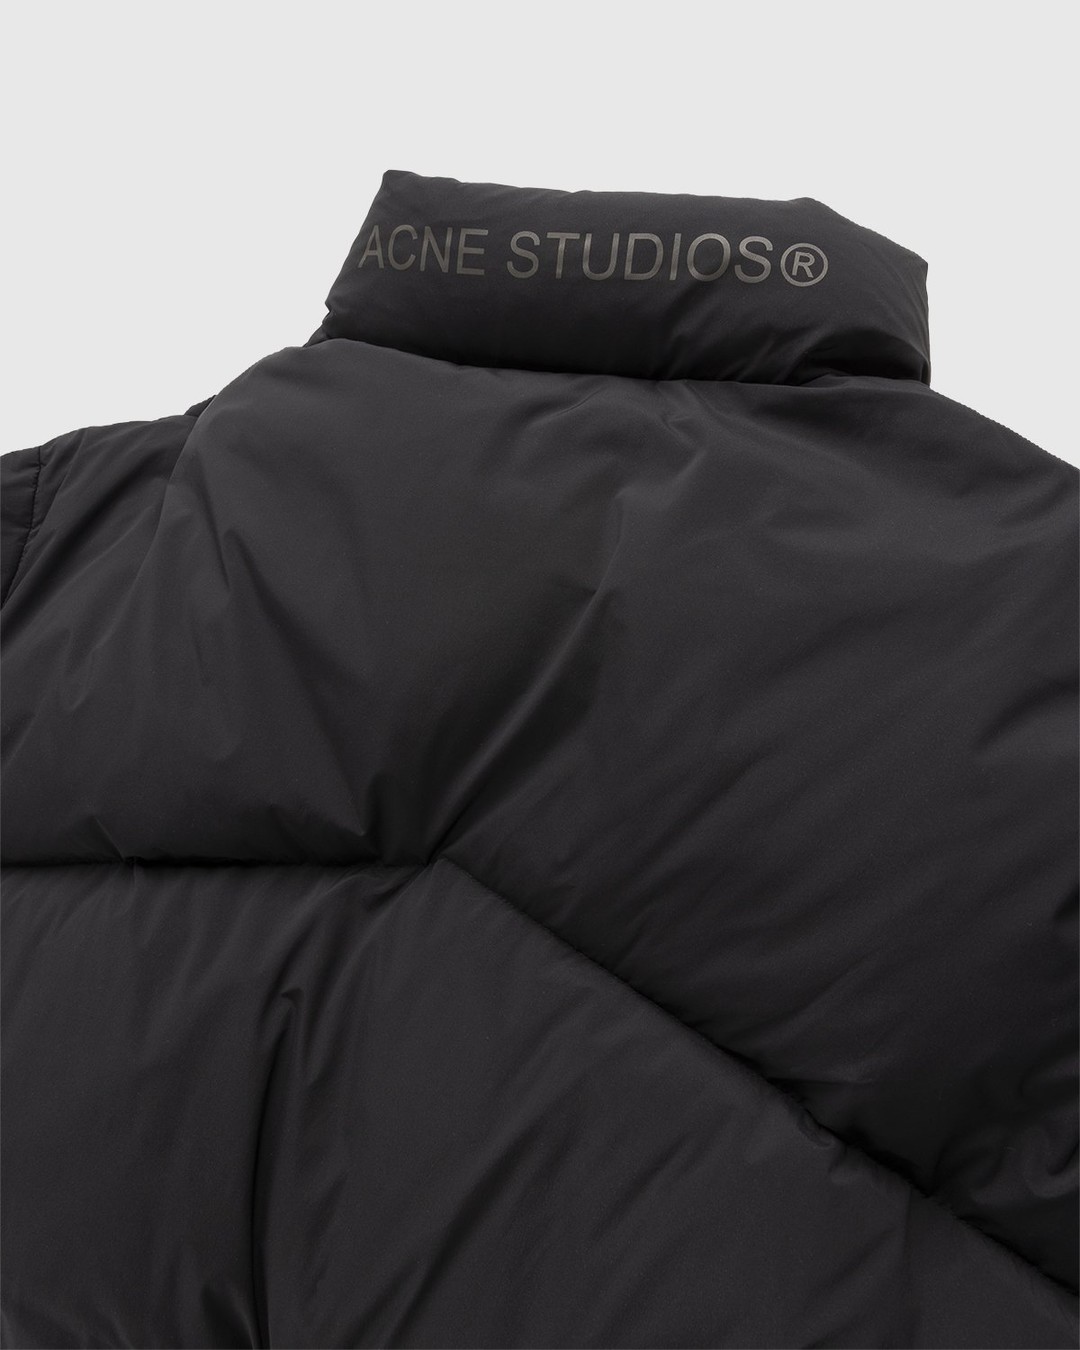 Acne Studios – Puffer Jacket Black - Outerwear - Black - Image 3